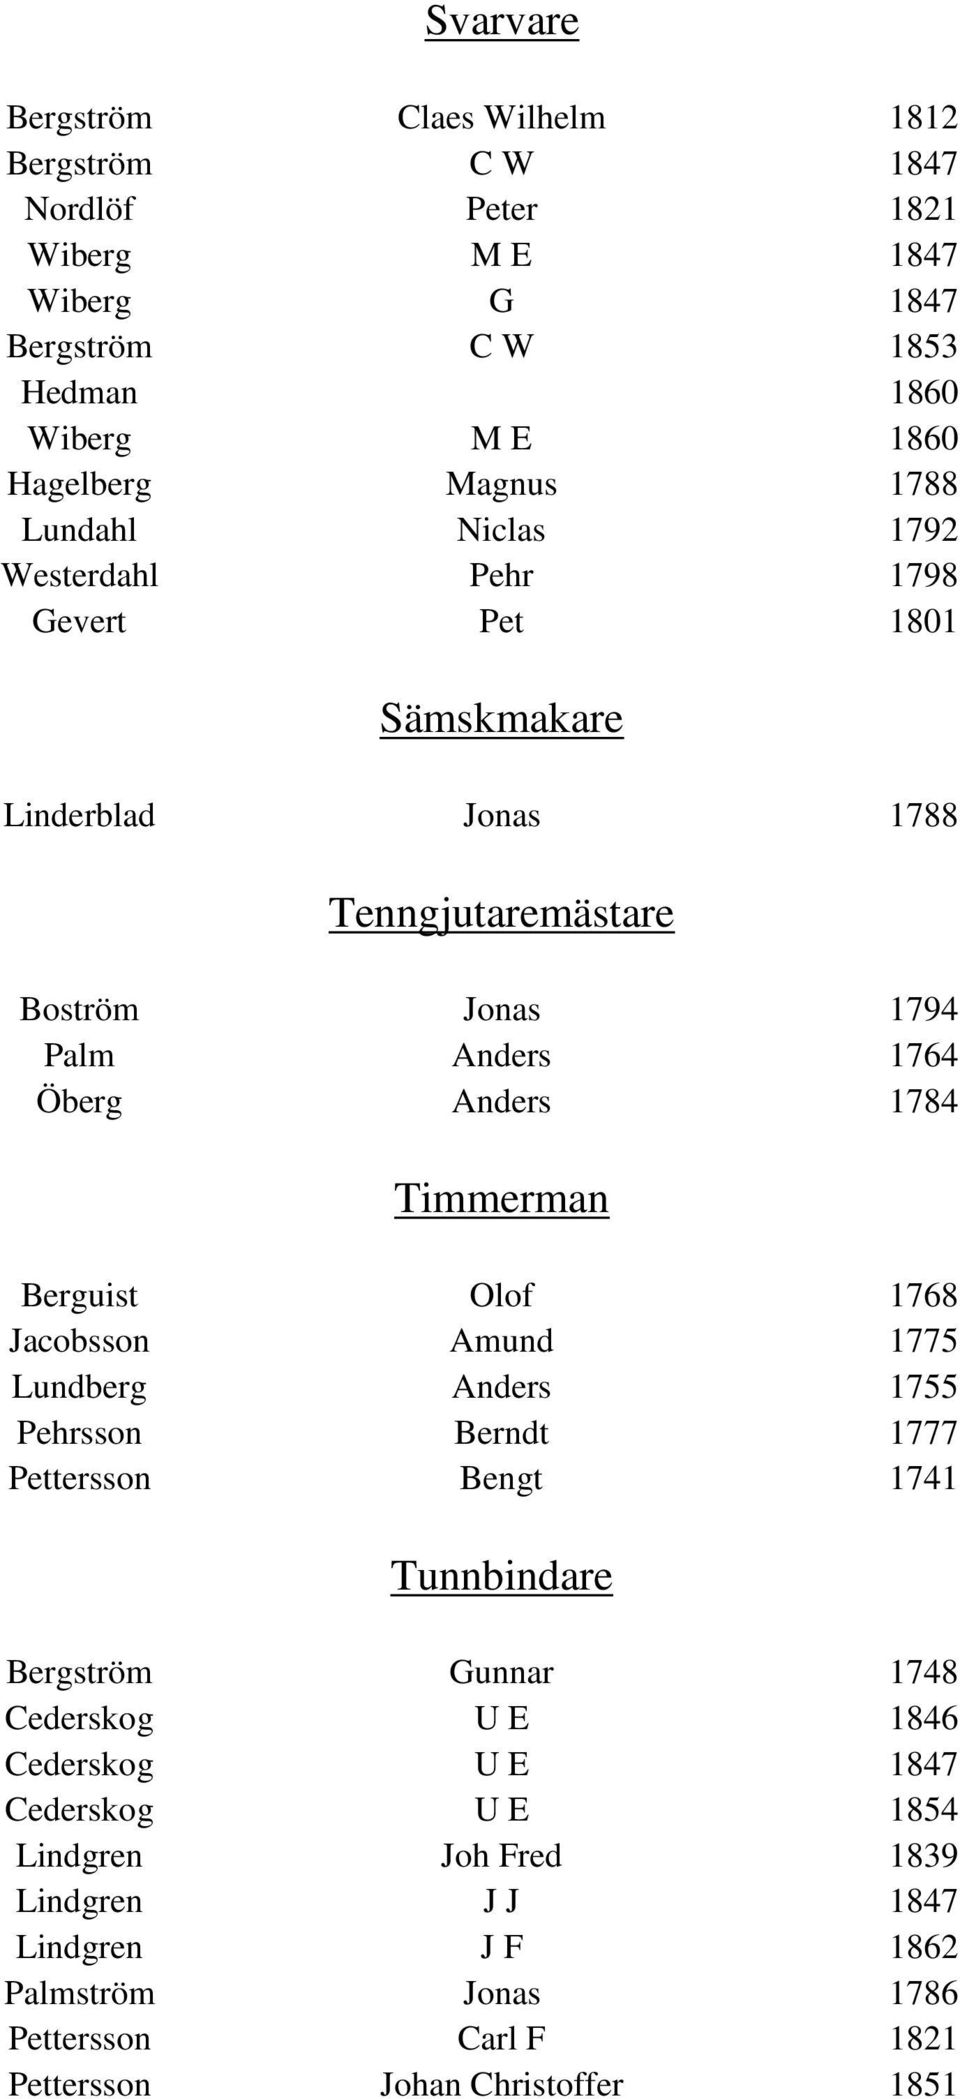 Timmerman Berguist Olof 1768 Jacobsson Amund 1775 Lundberg Anders 1755 Pehrsson Berndt 1777 Pettersson Bengt 1741 Tunnbindare Bergström Gunnar 1748 Cederskog U E 1846